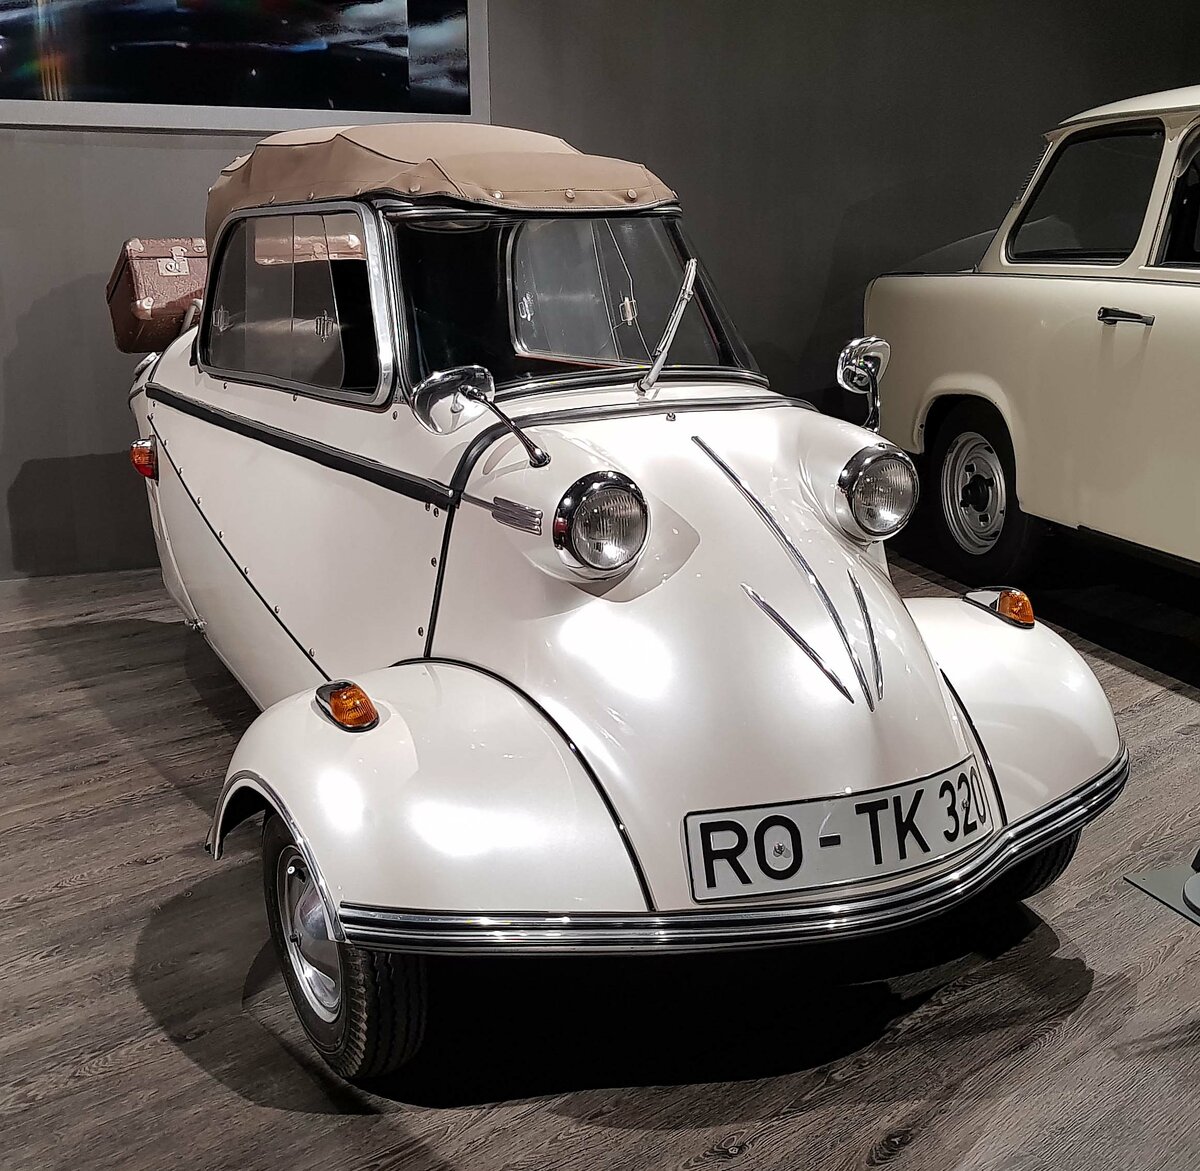 =Messerschmitt 201, Bauzeit 1955 - 1964, 191 ccm, 10,2 PS, gesehen im EFA Museum in Amerang, 06-2022